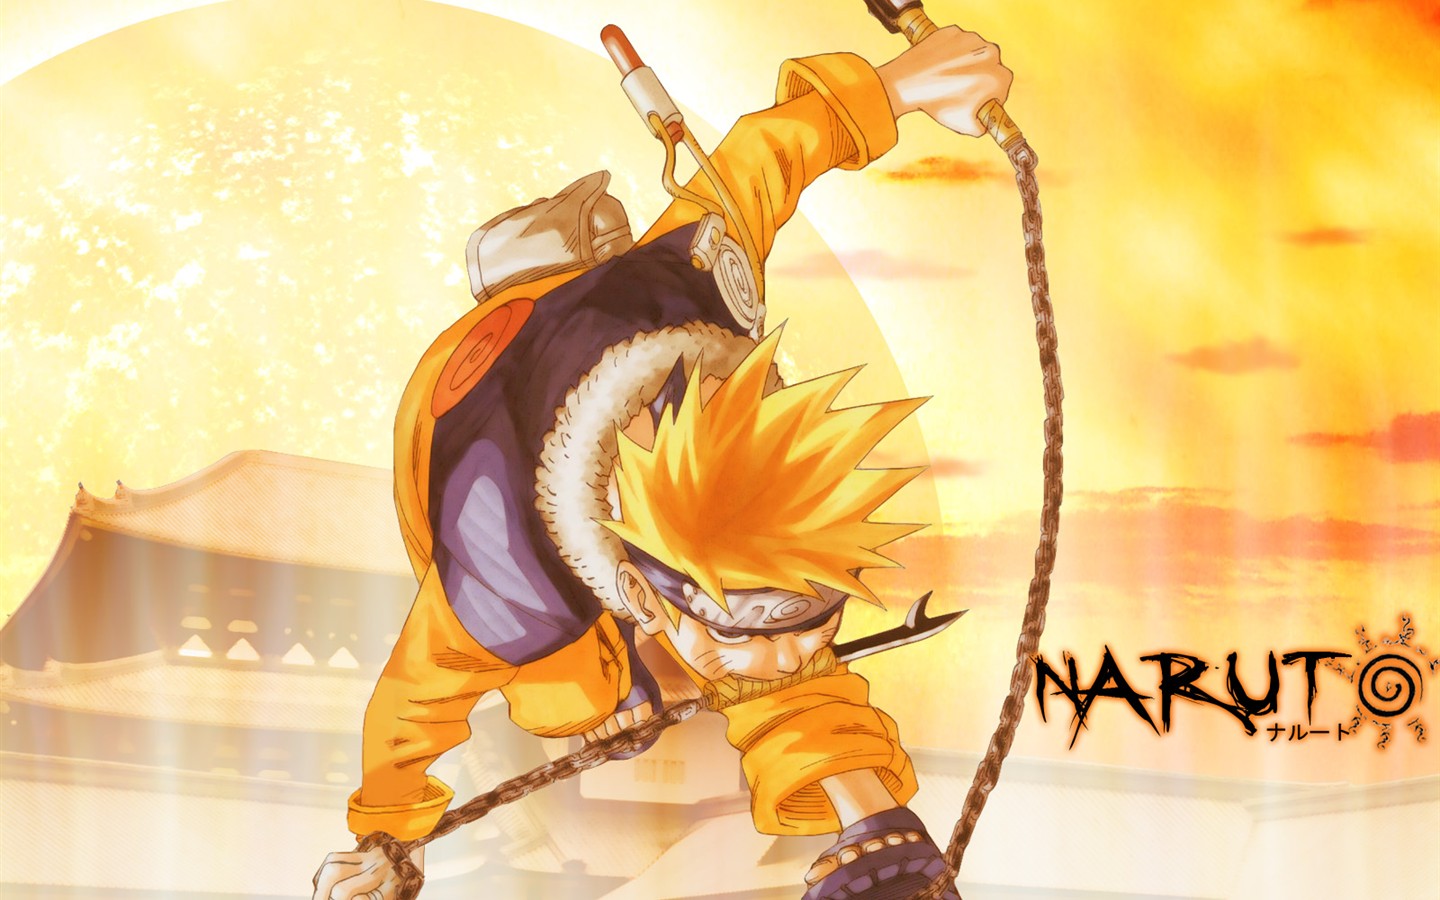  NARUTO - ナルト - 壁紙アルバム(1) #6 - 1440x900